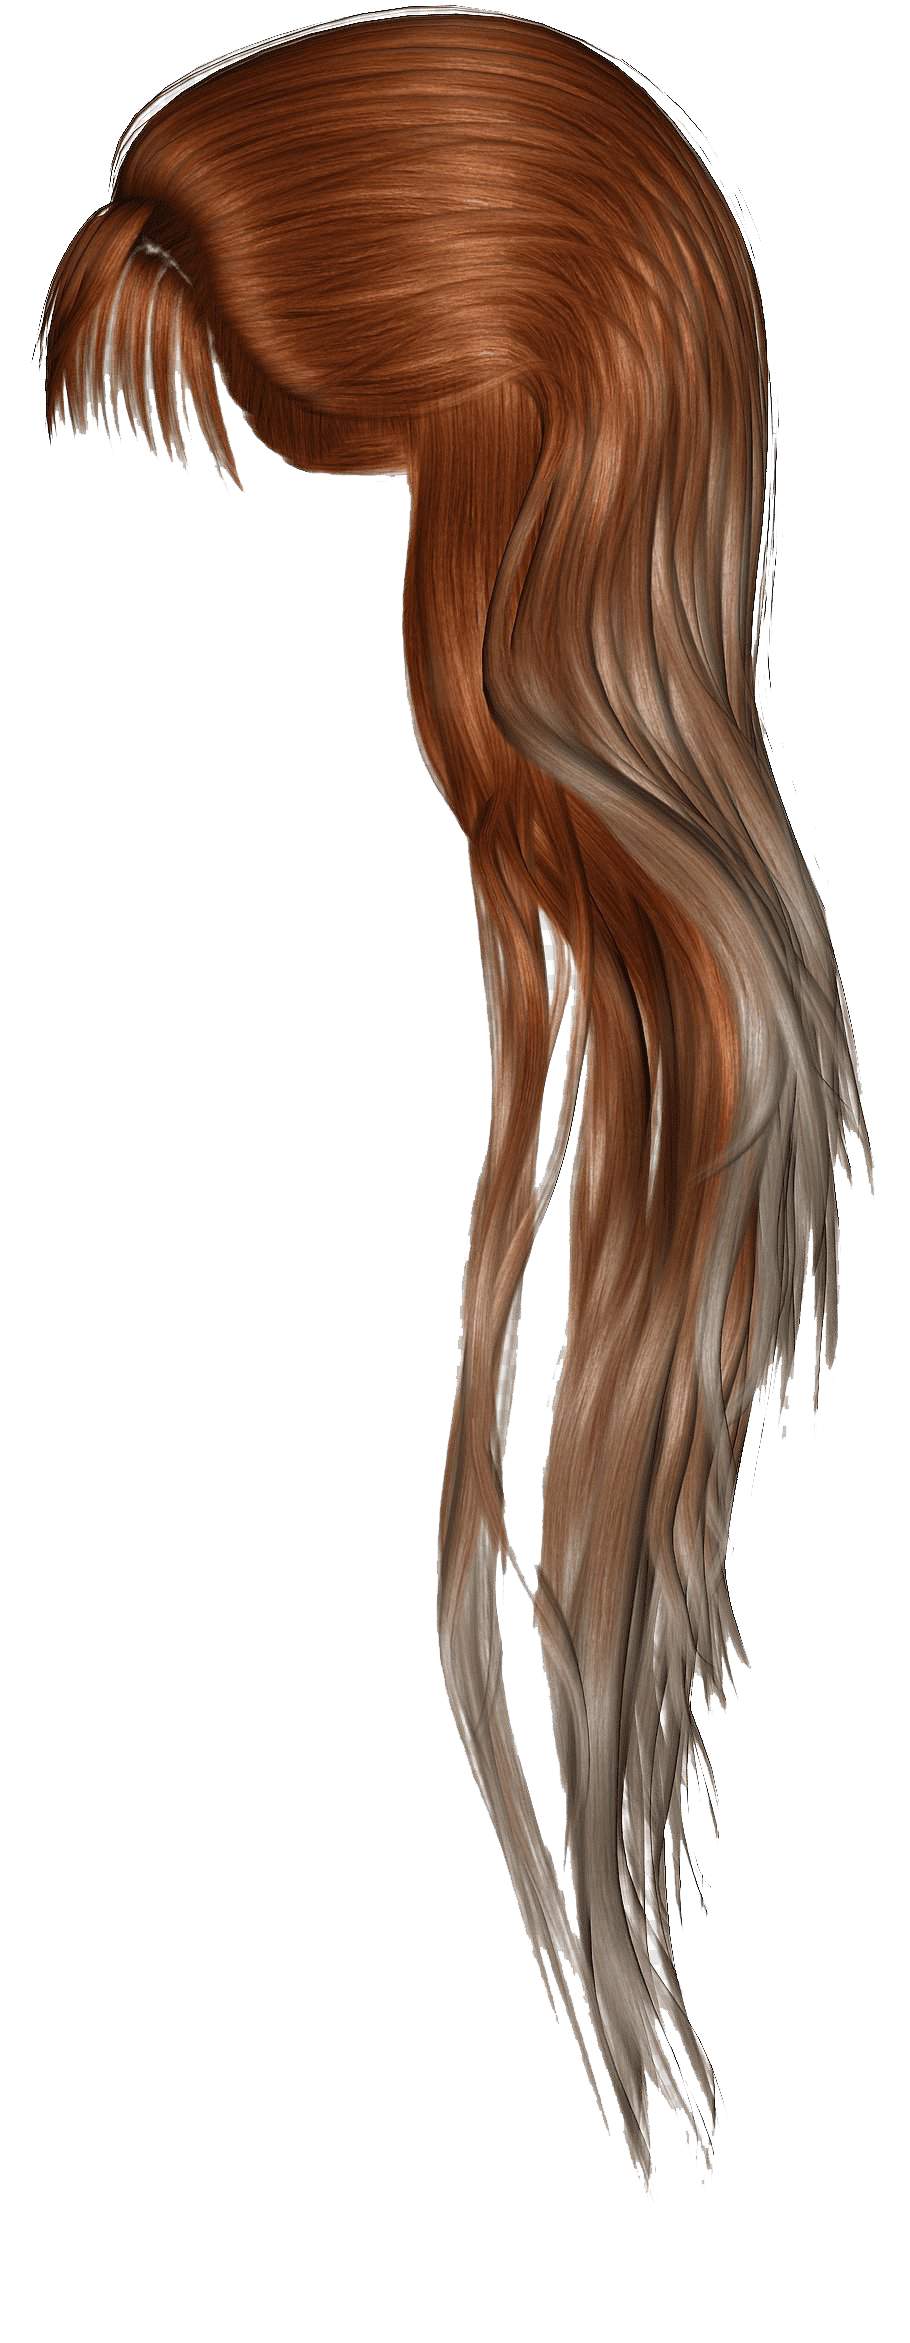 Brown Women Hair PNG HD Image